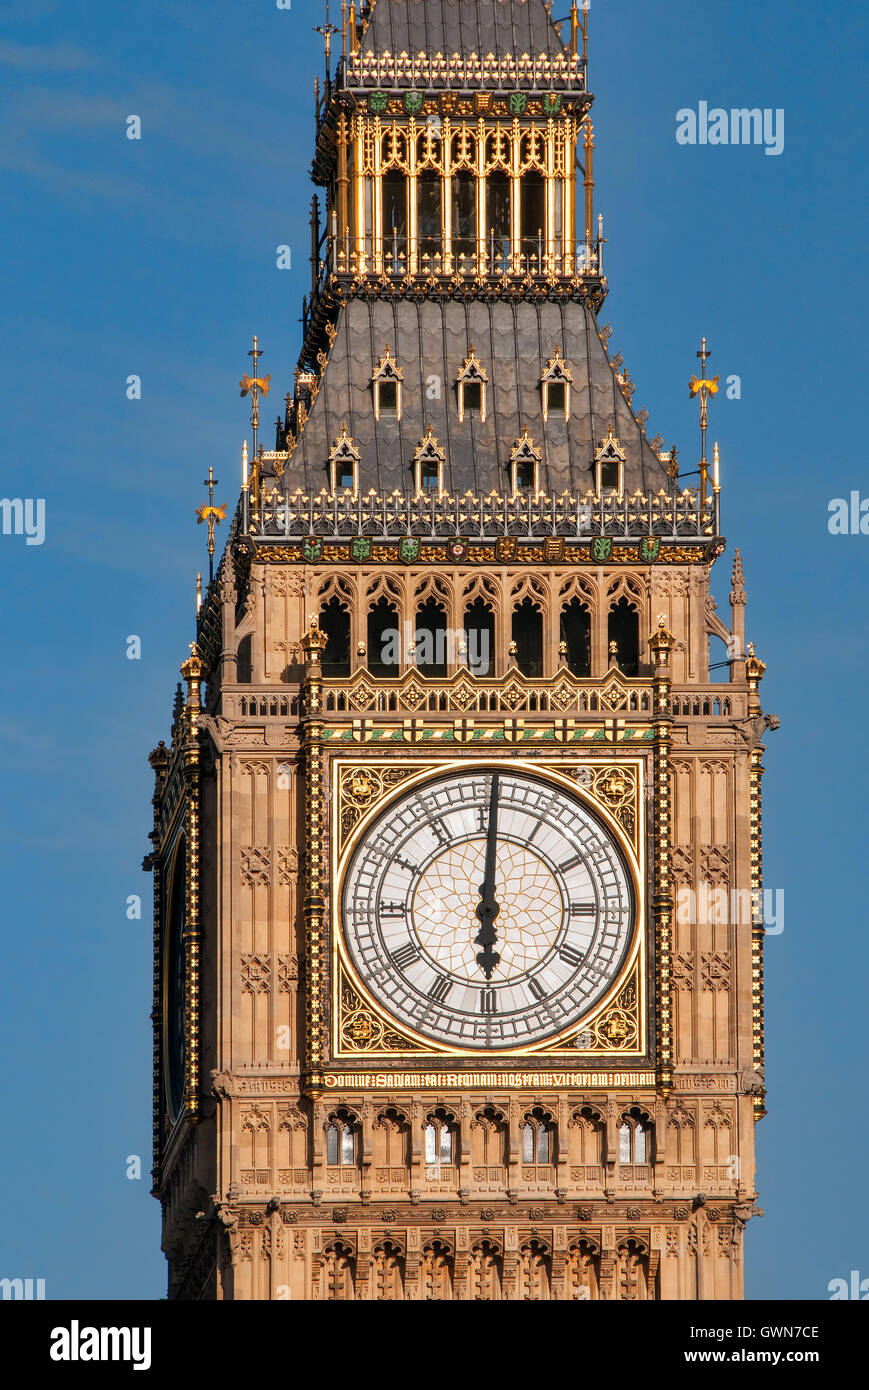 Big Ben's Clock Face at 6pm, Houses of Parliament, London, England, UK  Stock Photo - Alamy